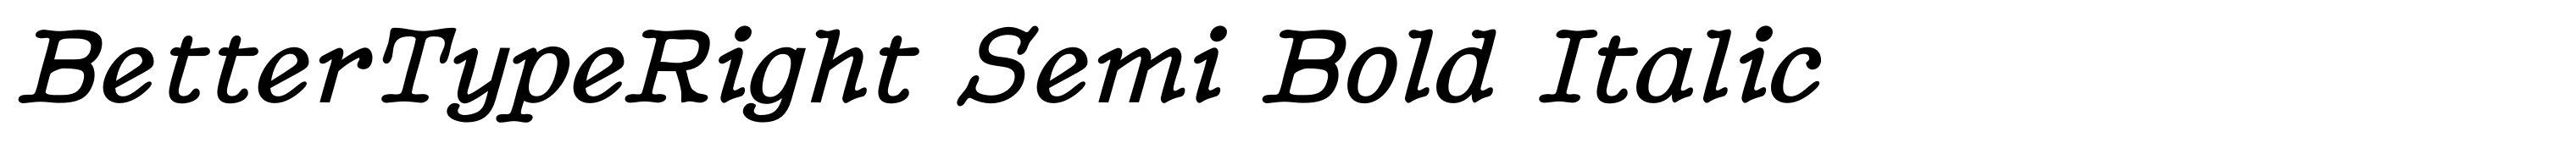 BetterTypeRight Semi Bold Italic